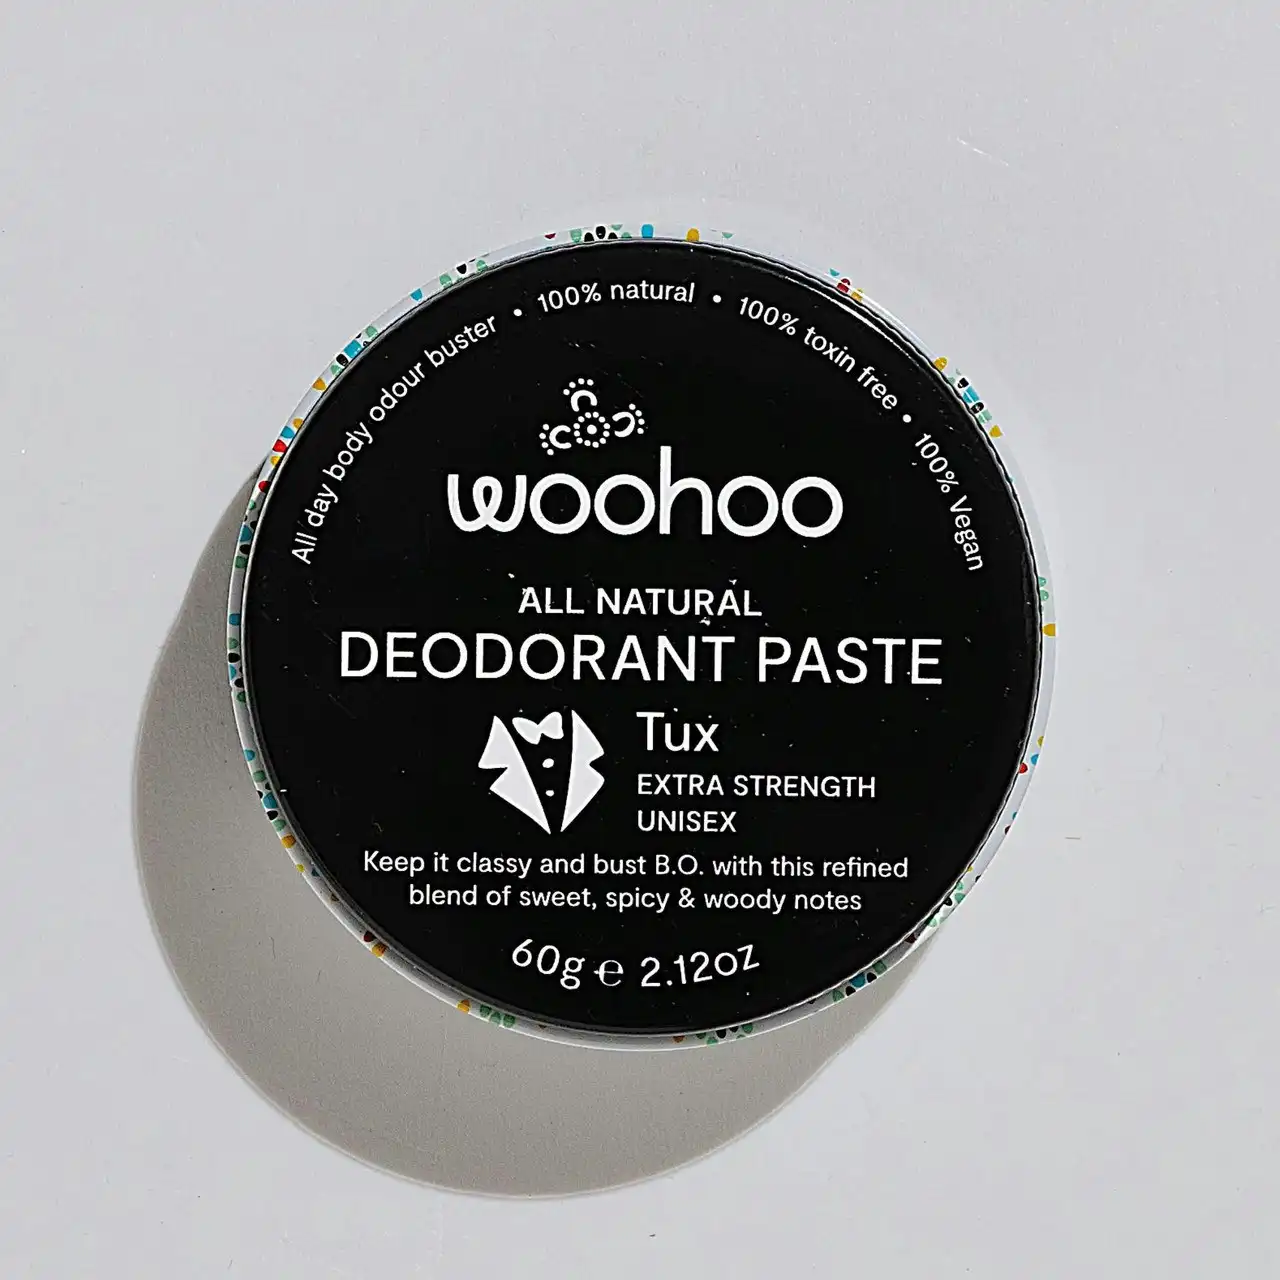 Woohoo All Natural Deodorant Paste Tux 60g